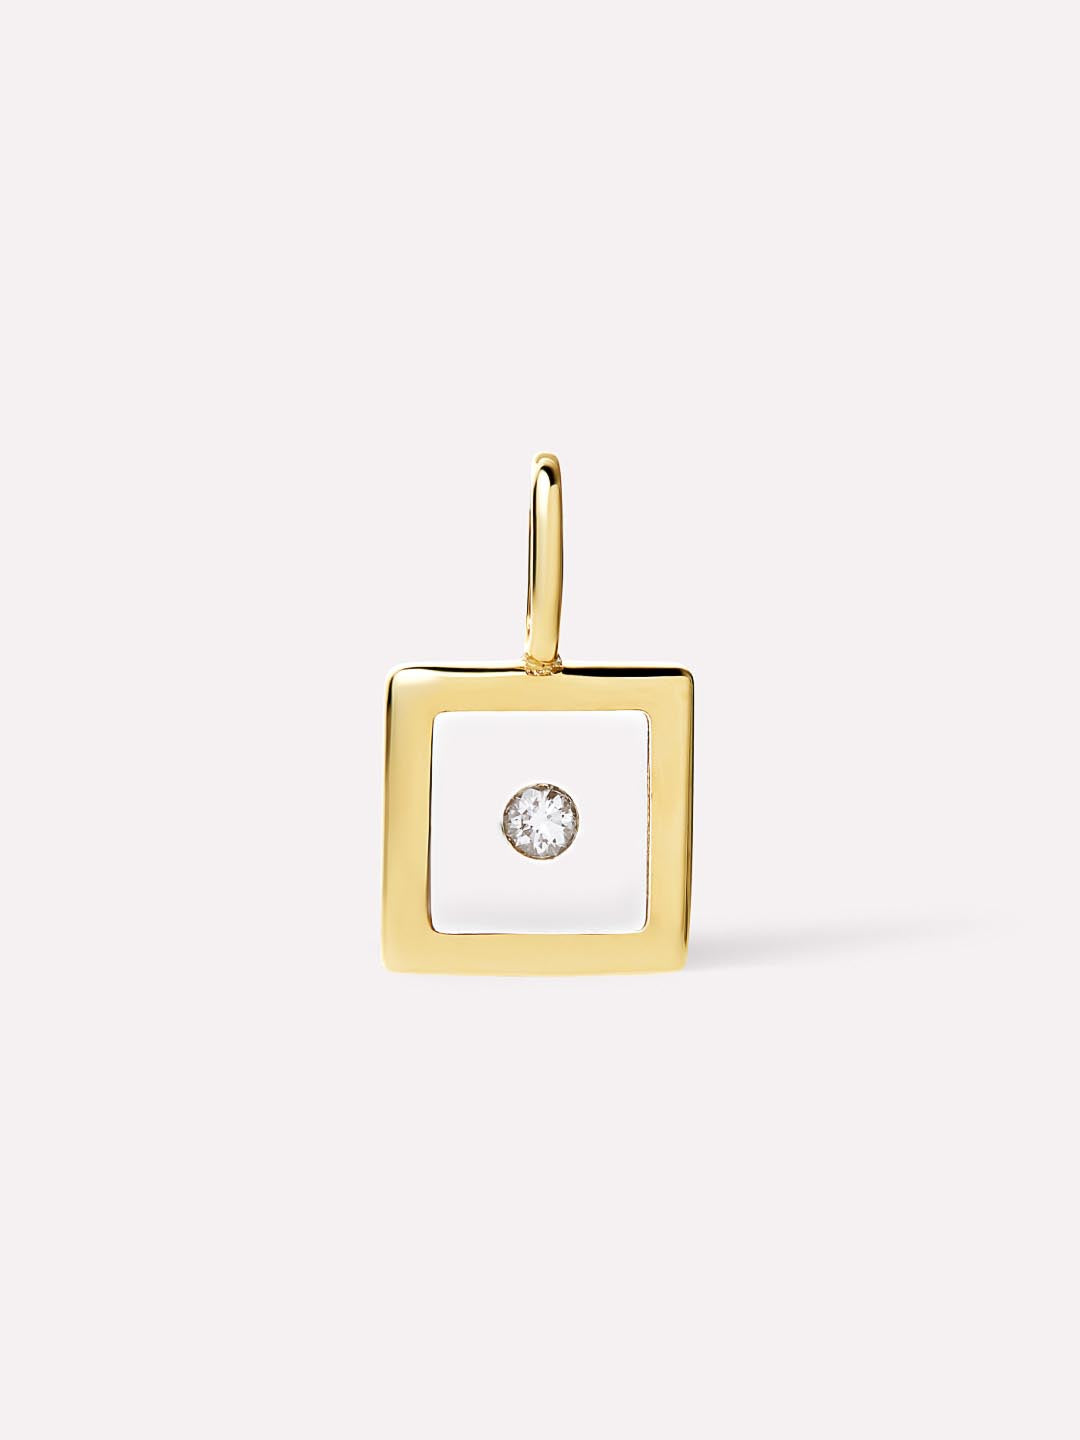 Gold Pendant - Square Floating Diamond Charm